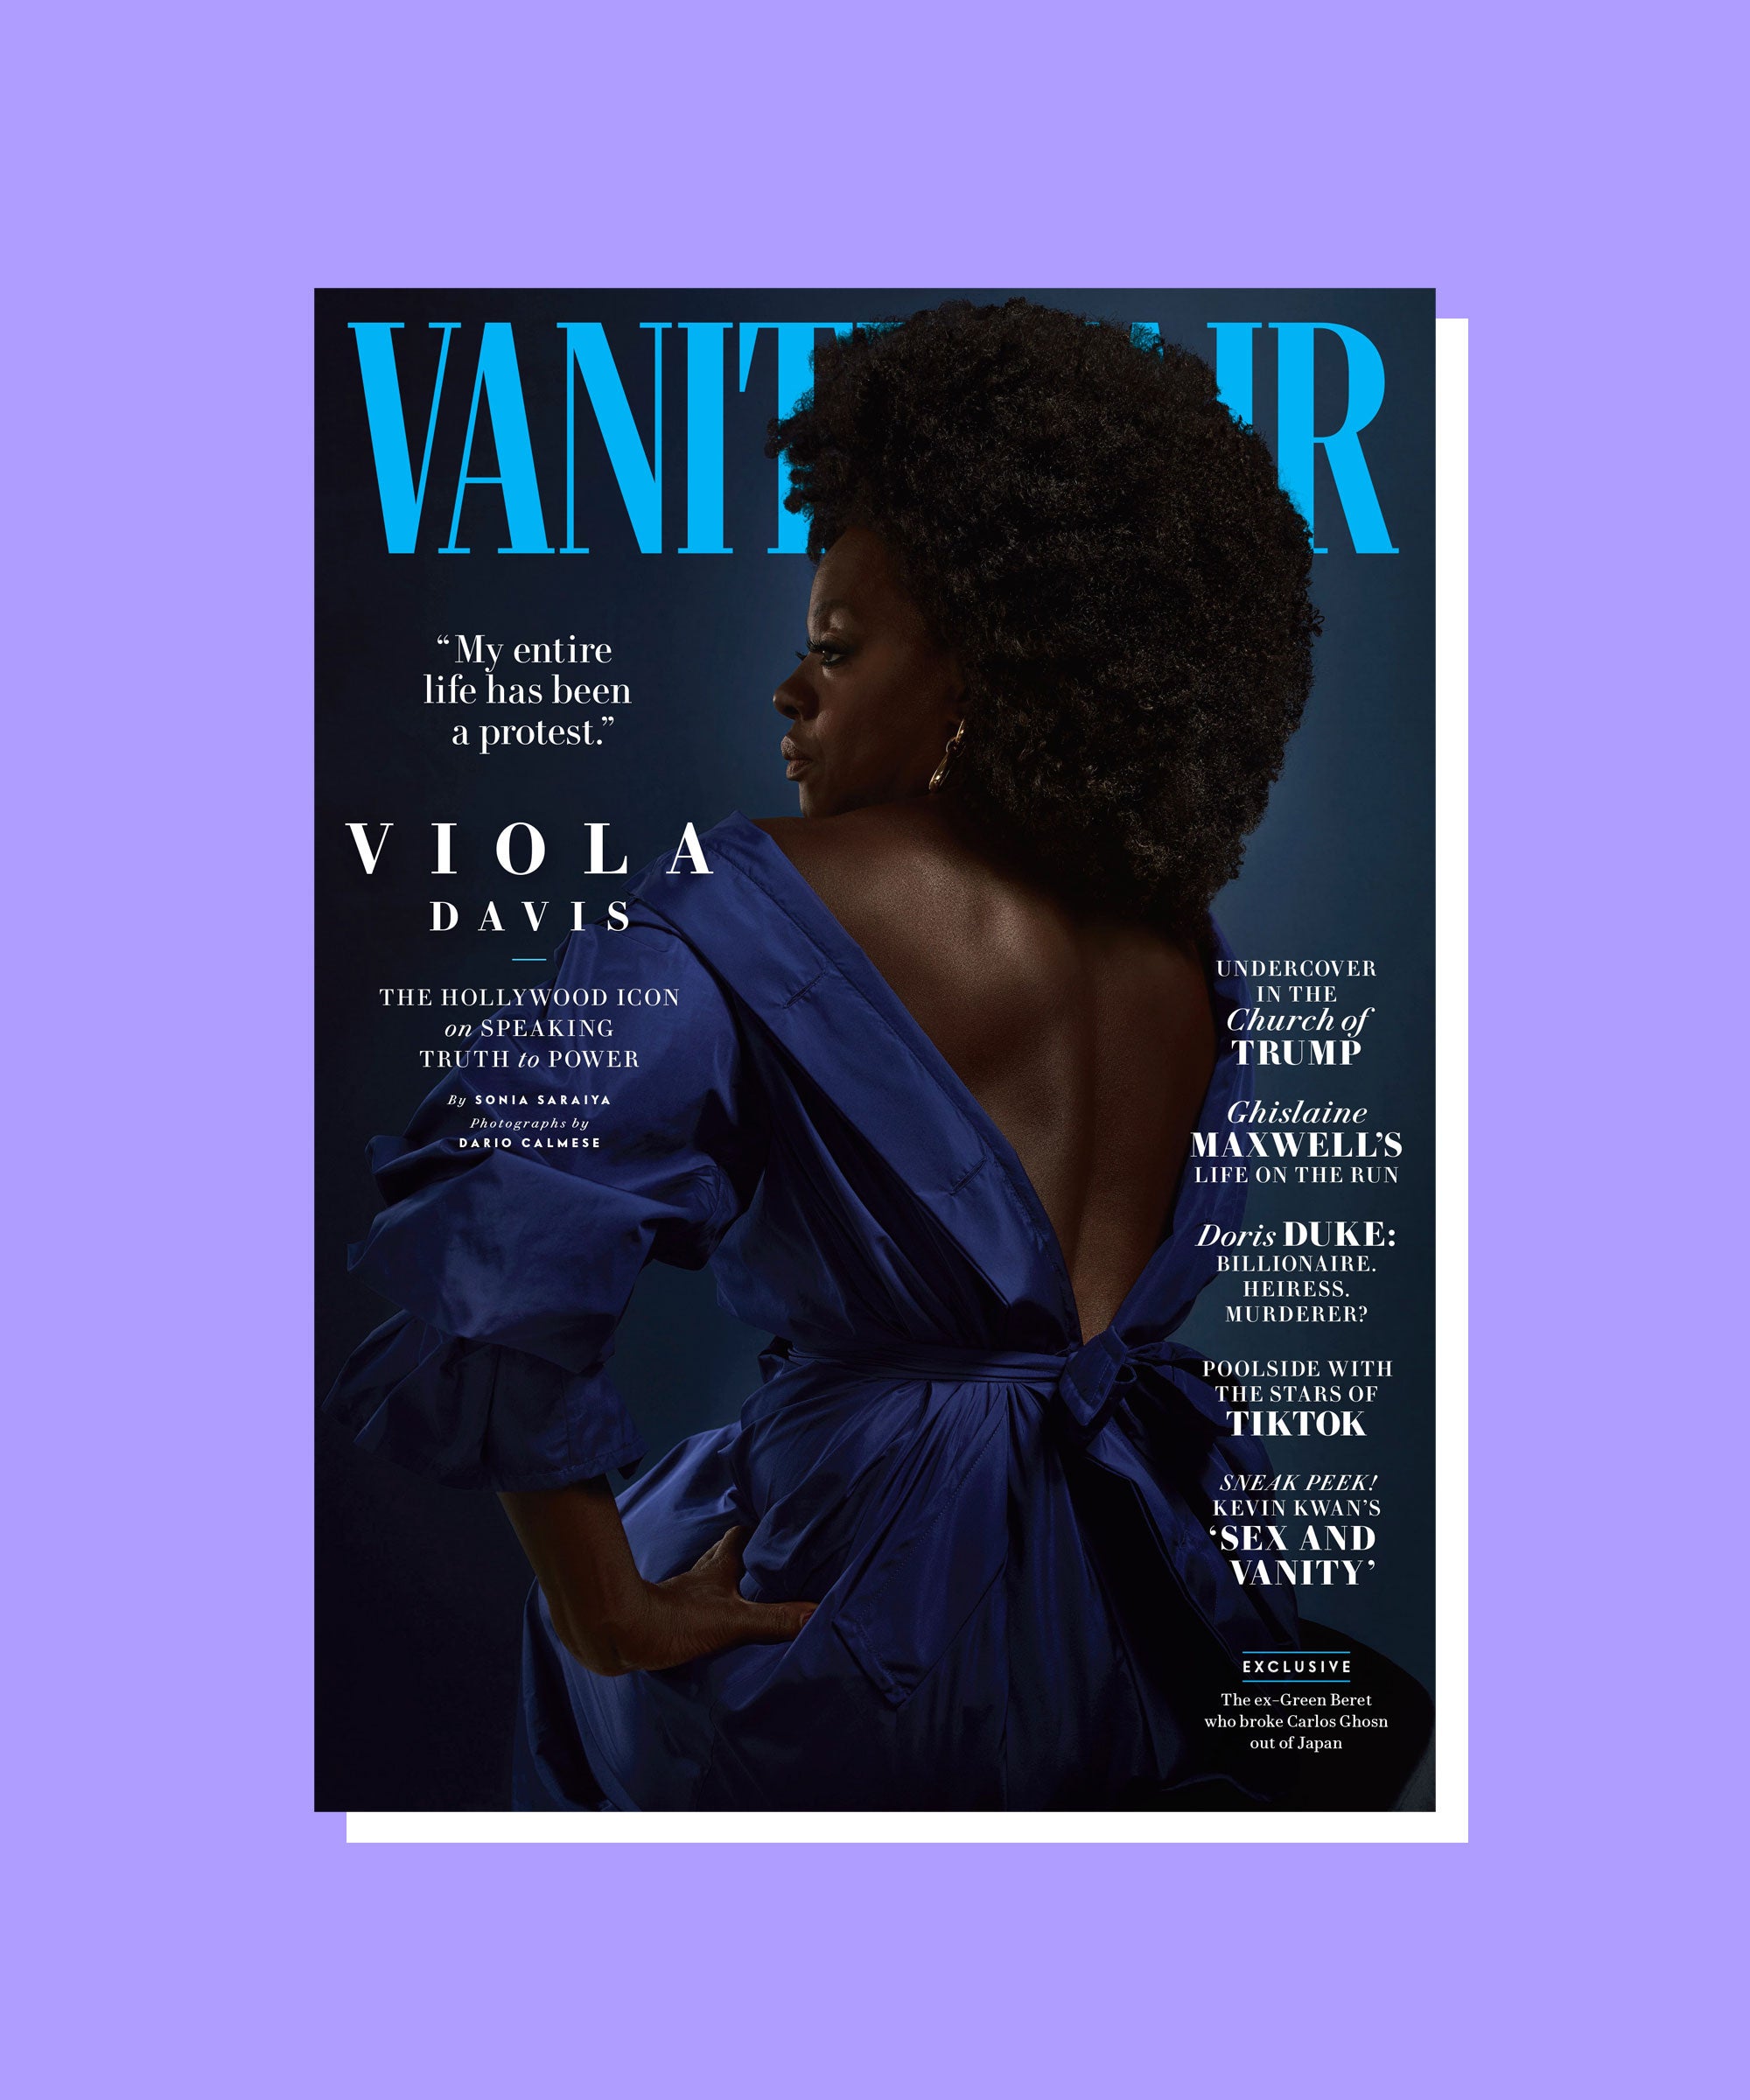 Vanity Fair praised for diverse cover